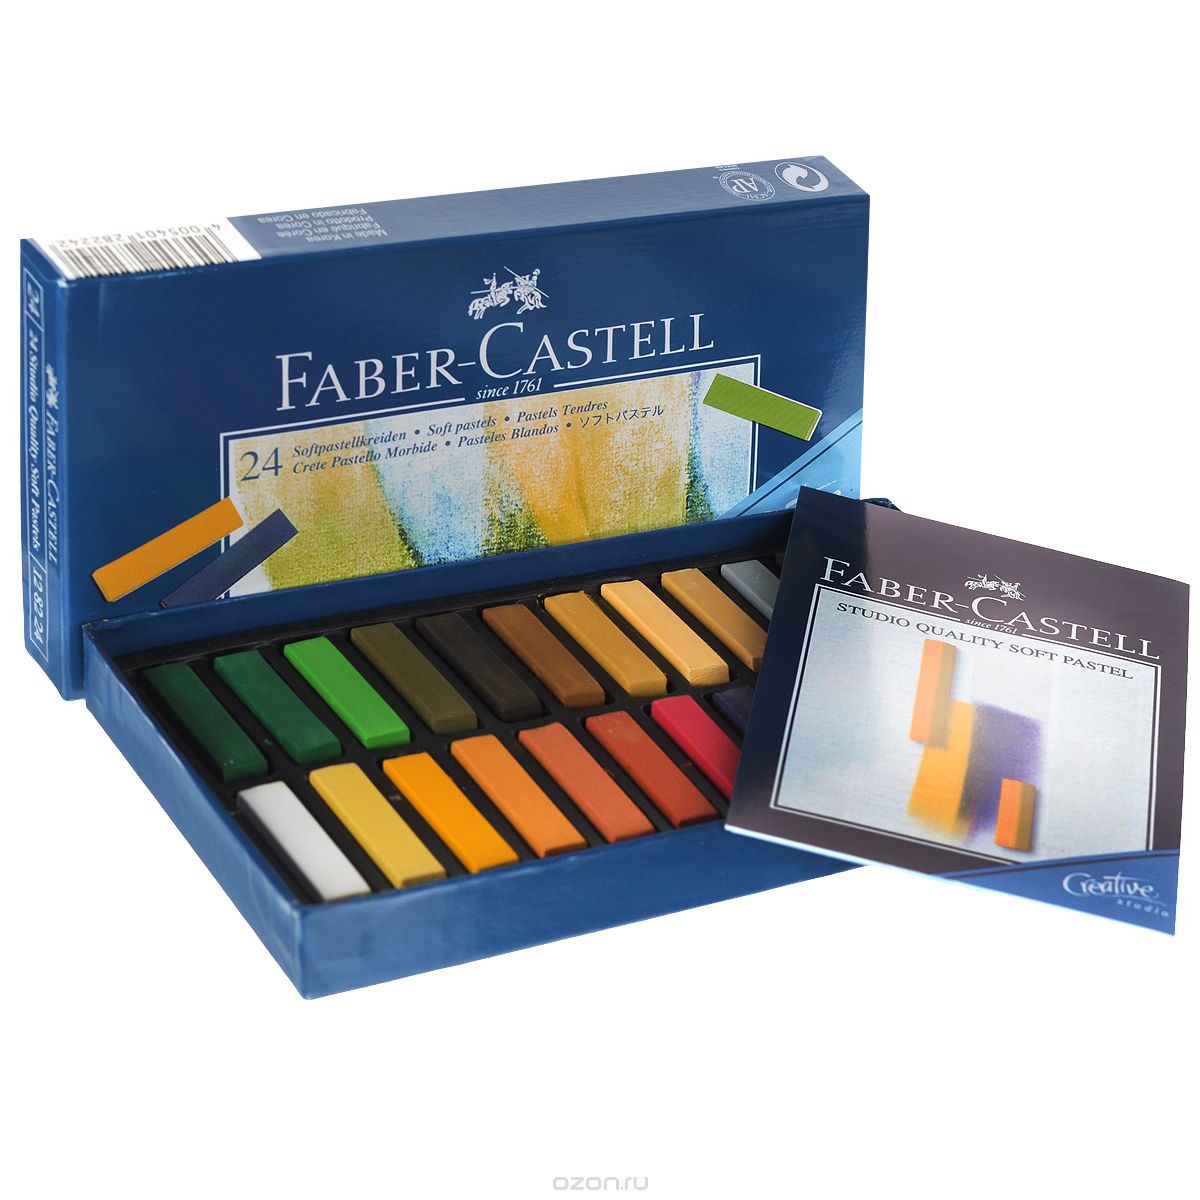 Faber-Castell  - Studio Quality Soft Pastels 24 